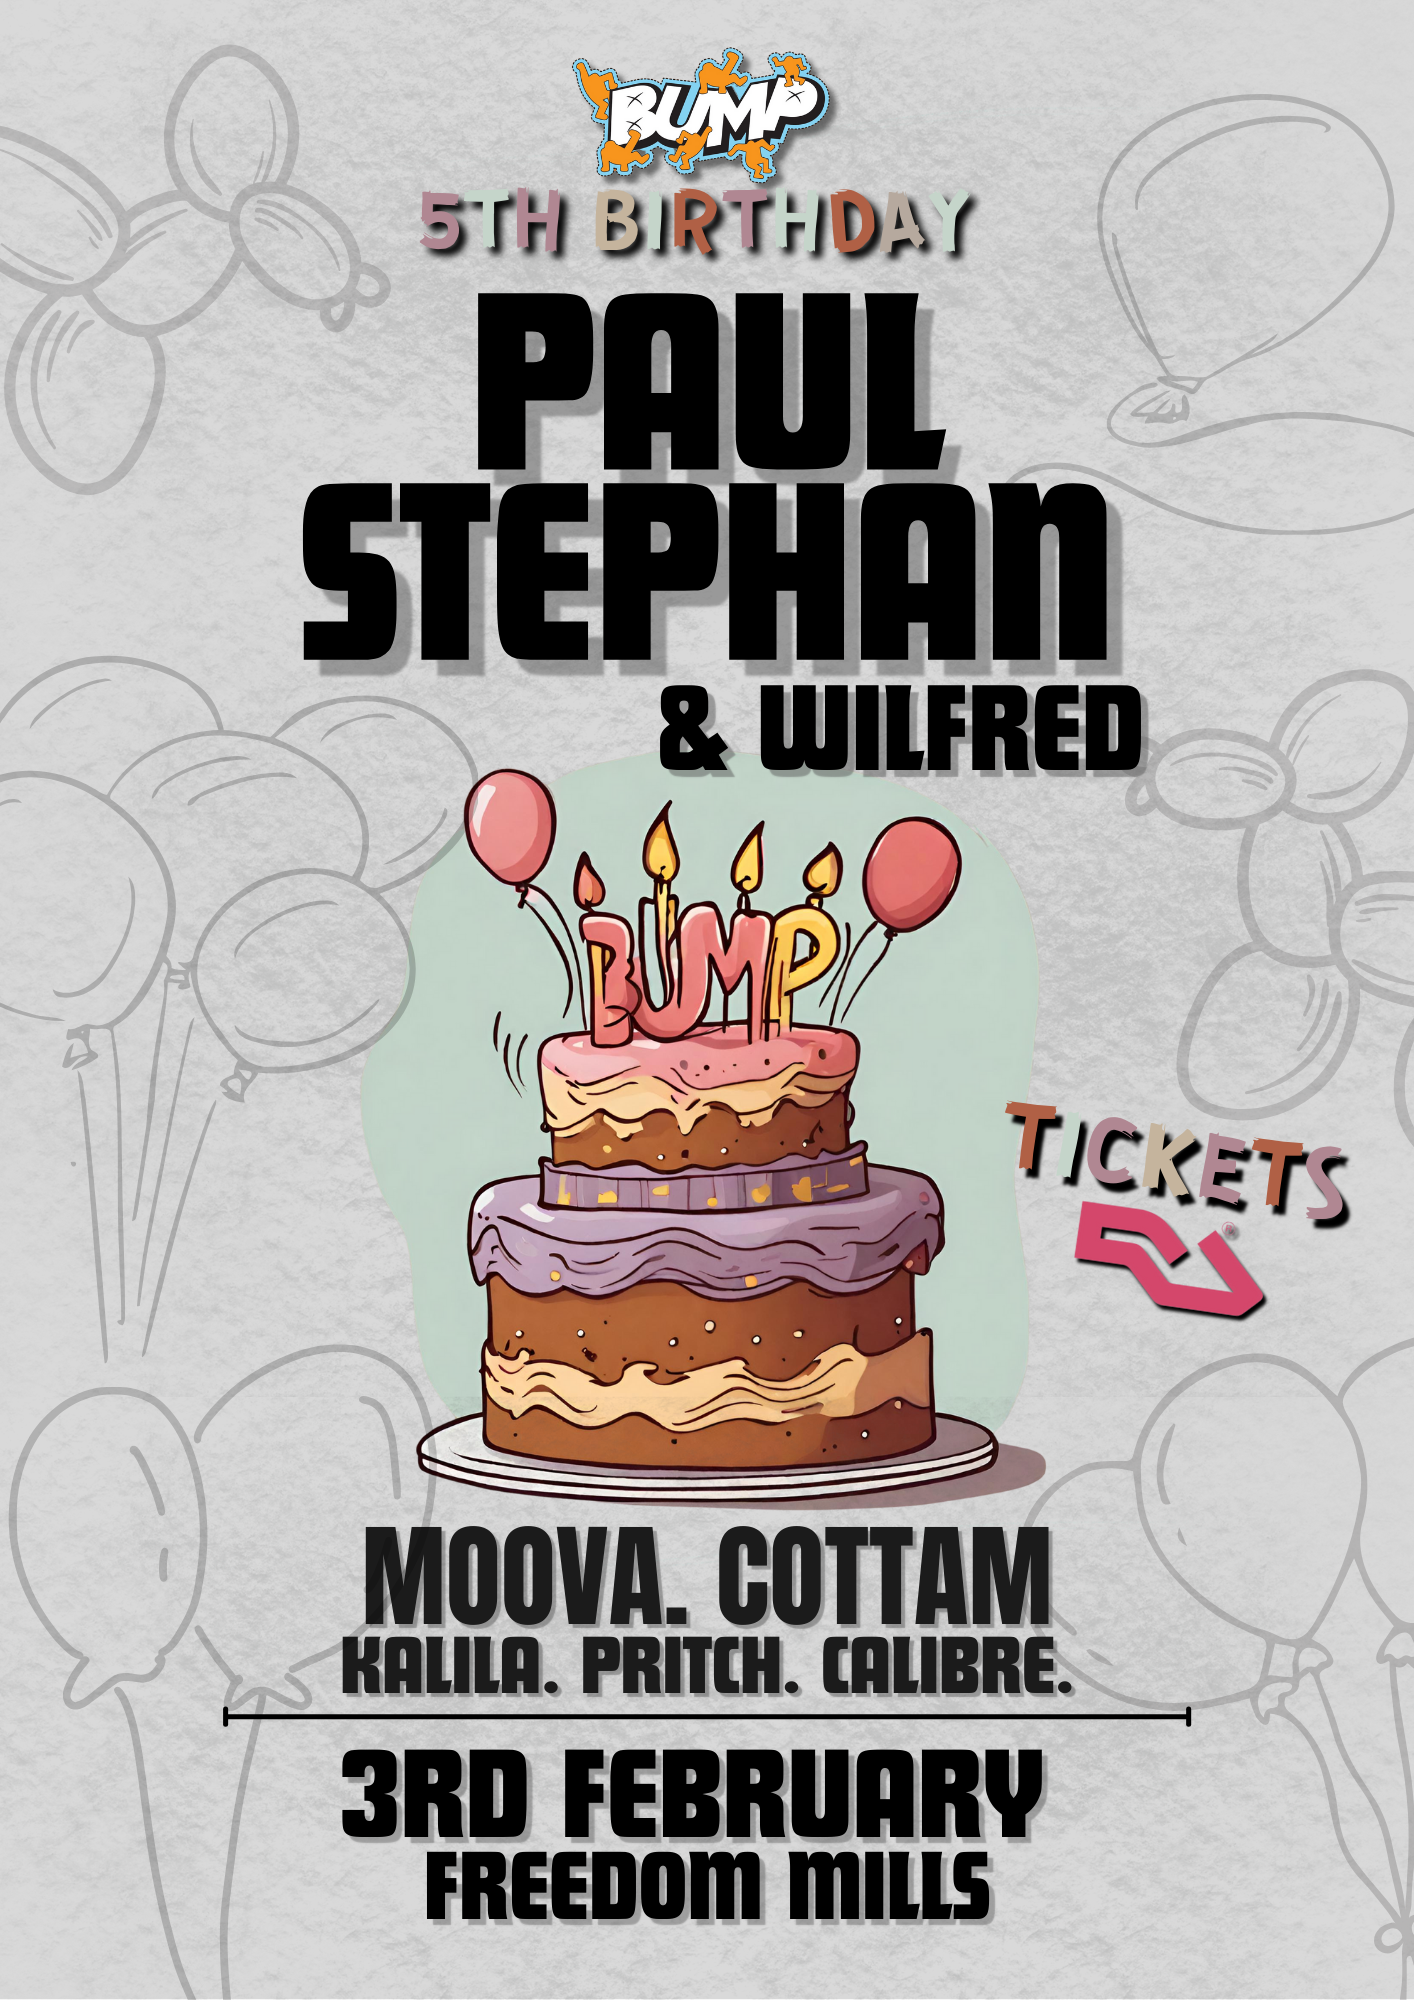 Bump Leeds 5th Birthday w/ Paul Stephan & Wilfred + Moova / Cottam & Friends - フライヤー裏